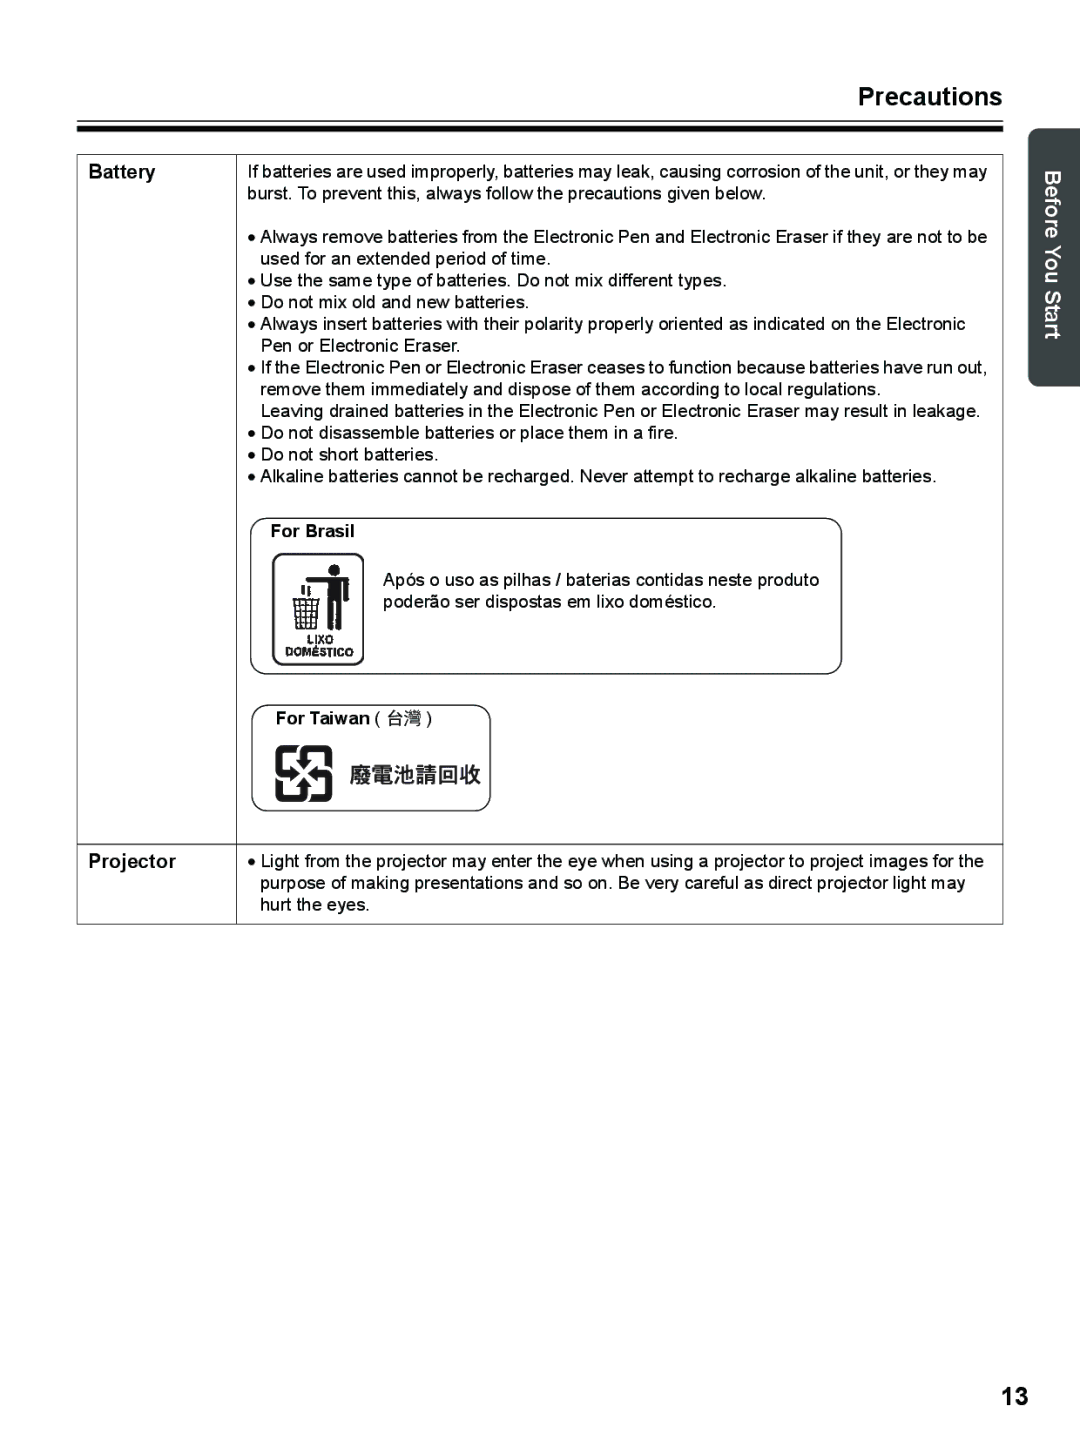 Panasonic UB-8325 operating instructions For Brasil, For Taiwan 台灣 